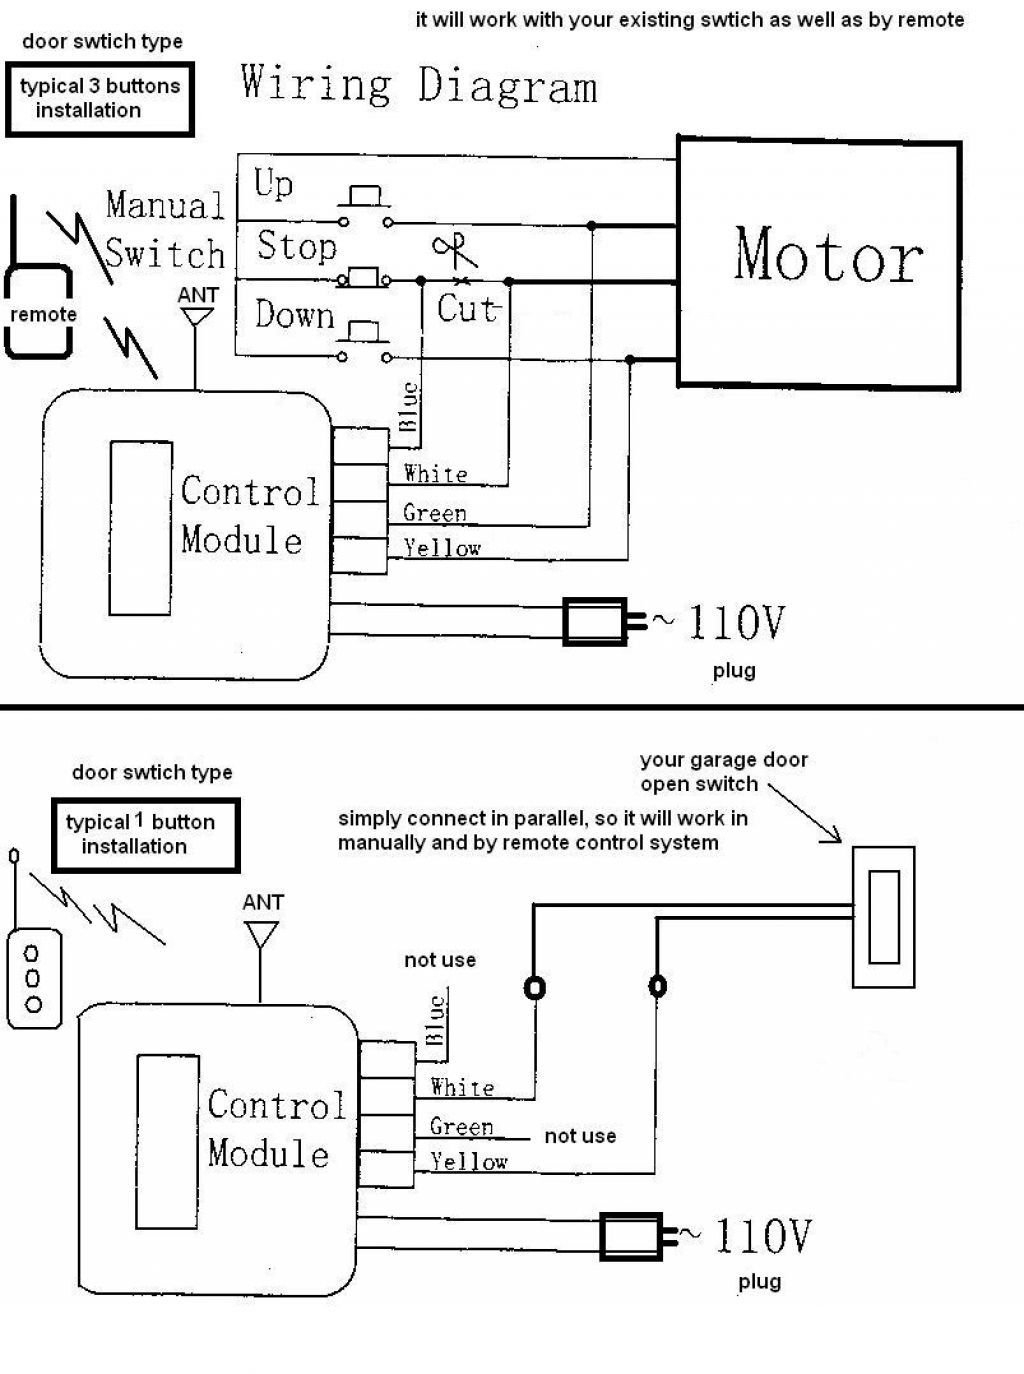 Diagram Gas Grill Ignitor Wiring Diagram Full Version Hd Quality Wiring Diagram Mediman Eurocast It